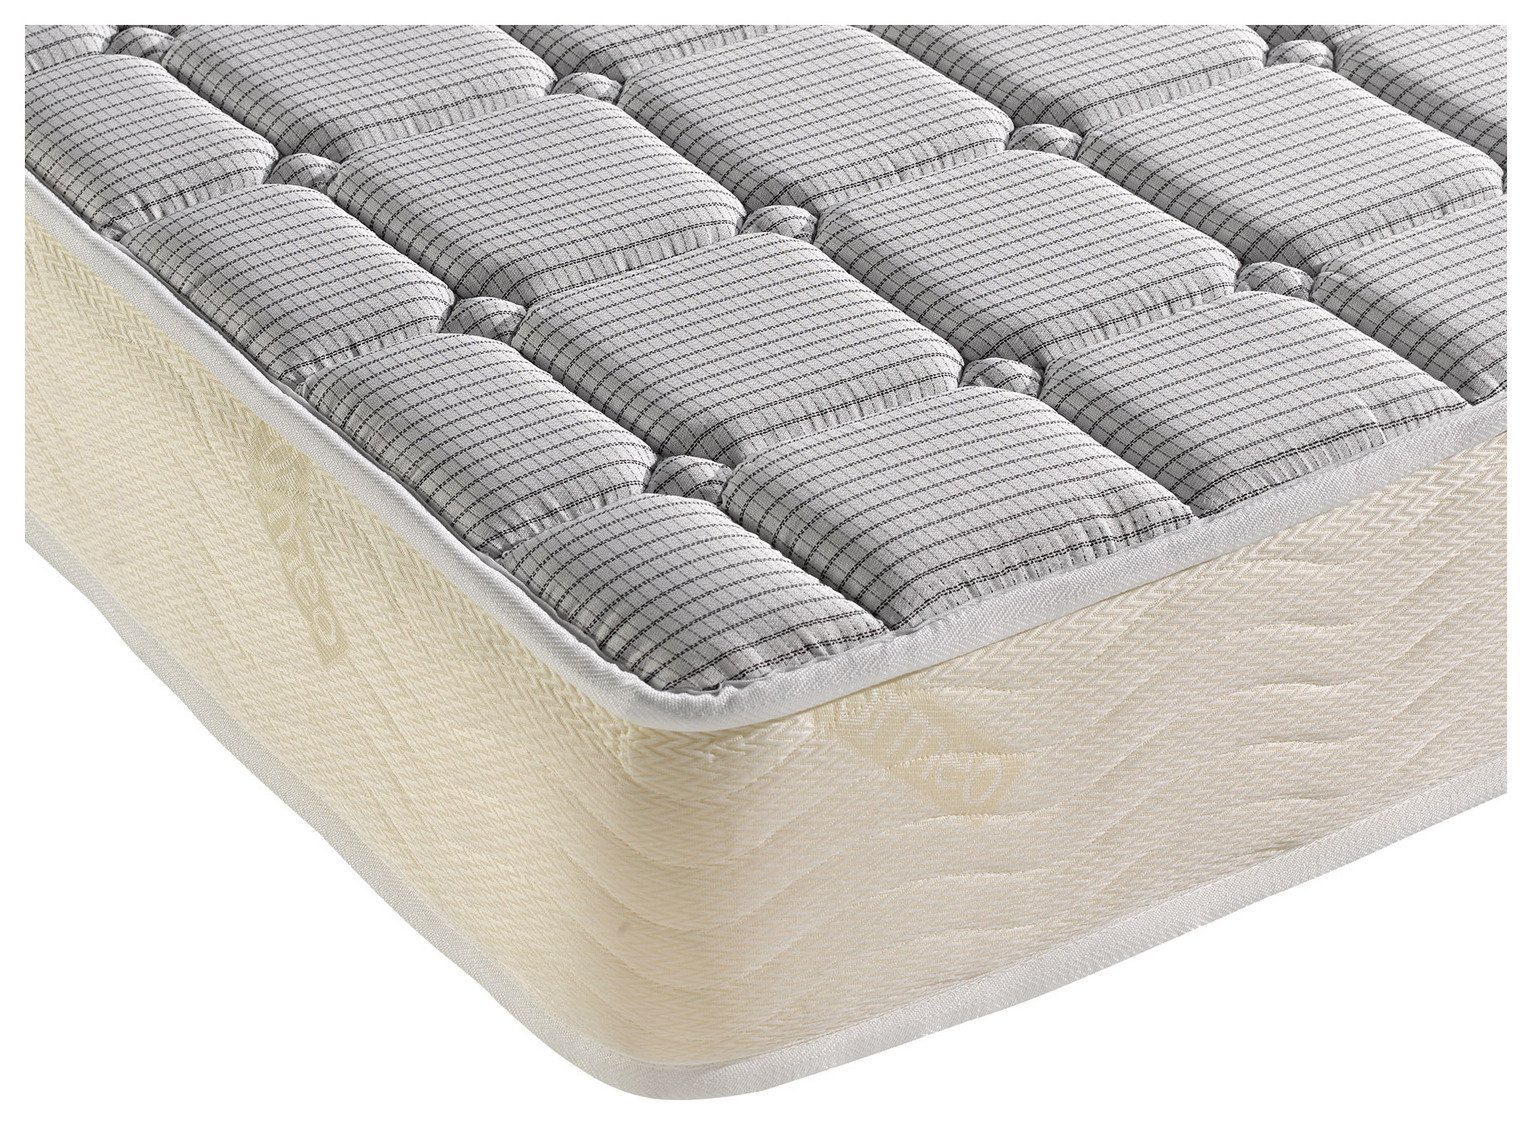 dormeo wellsleep hybrid double mattress